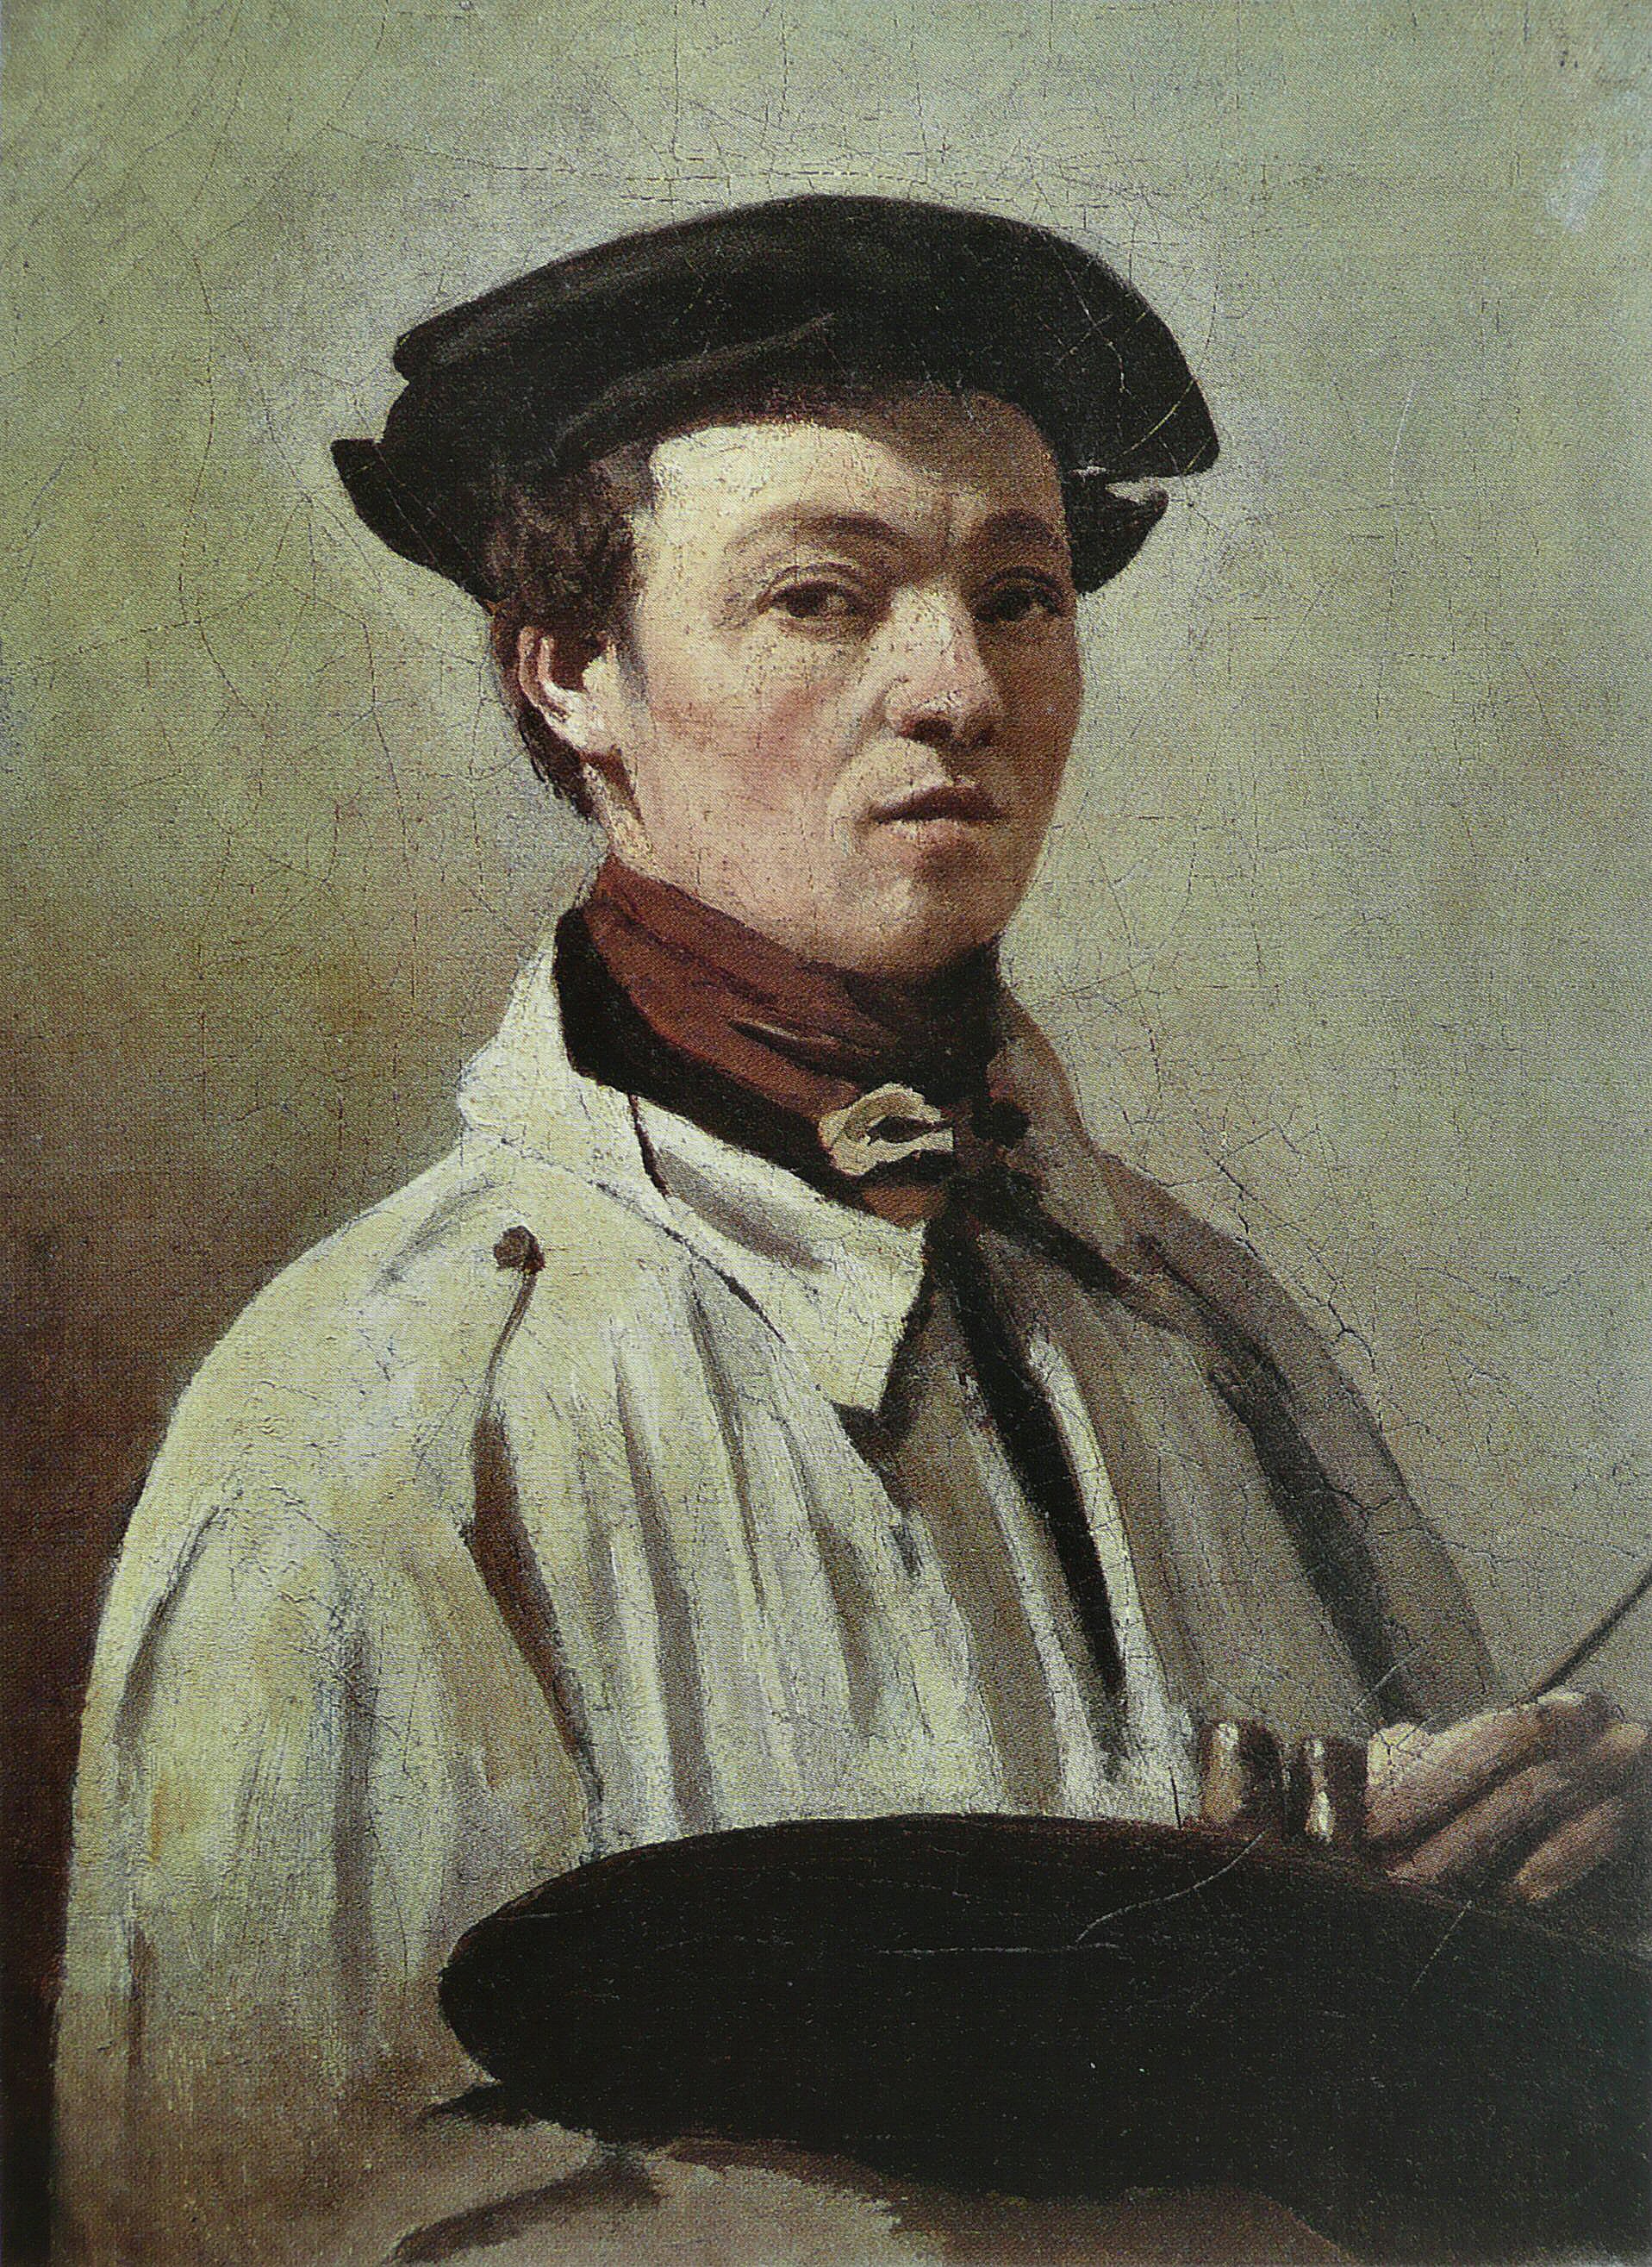 Jean-Baptiste-Camille Corot - July 16, 1796 - February 22, 1875